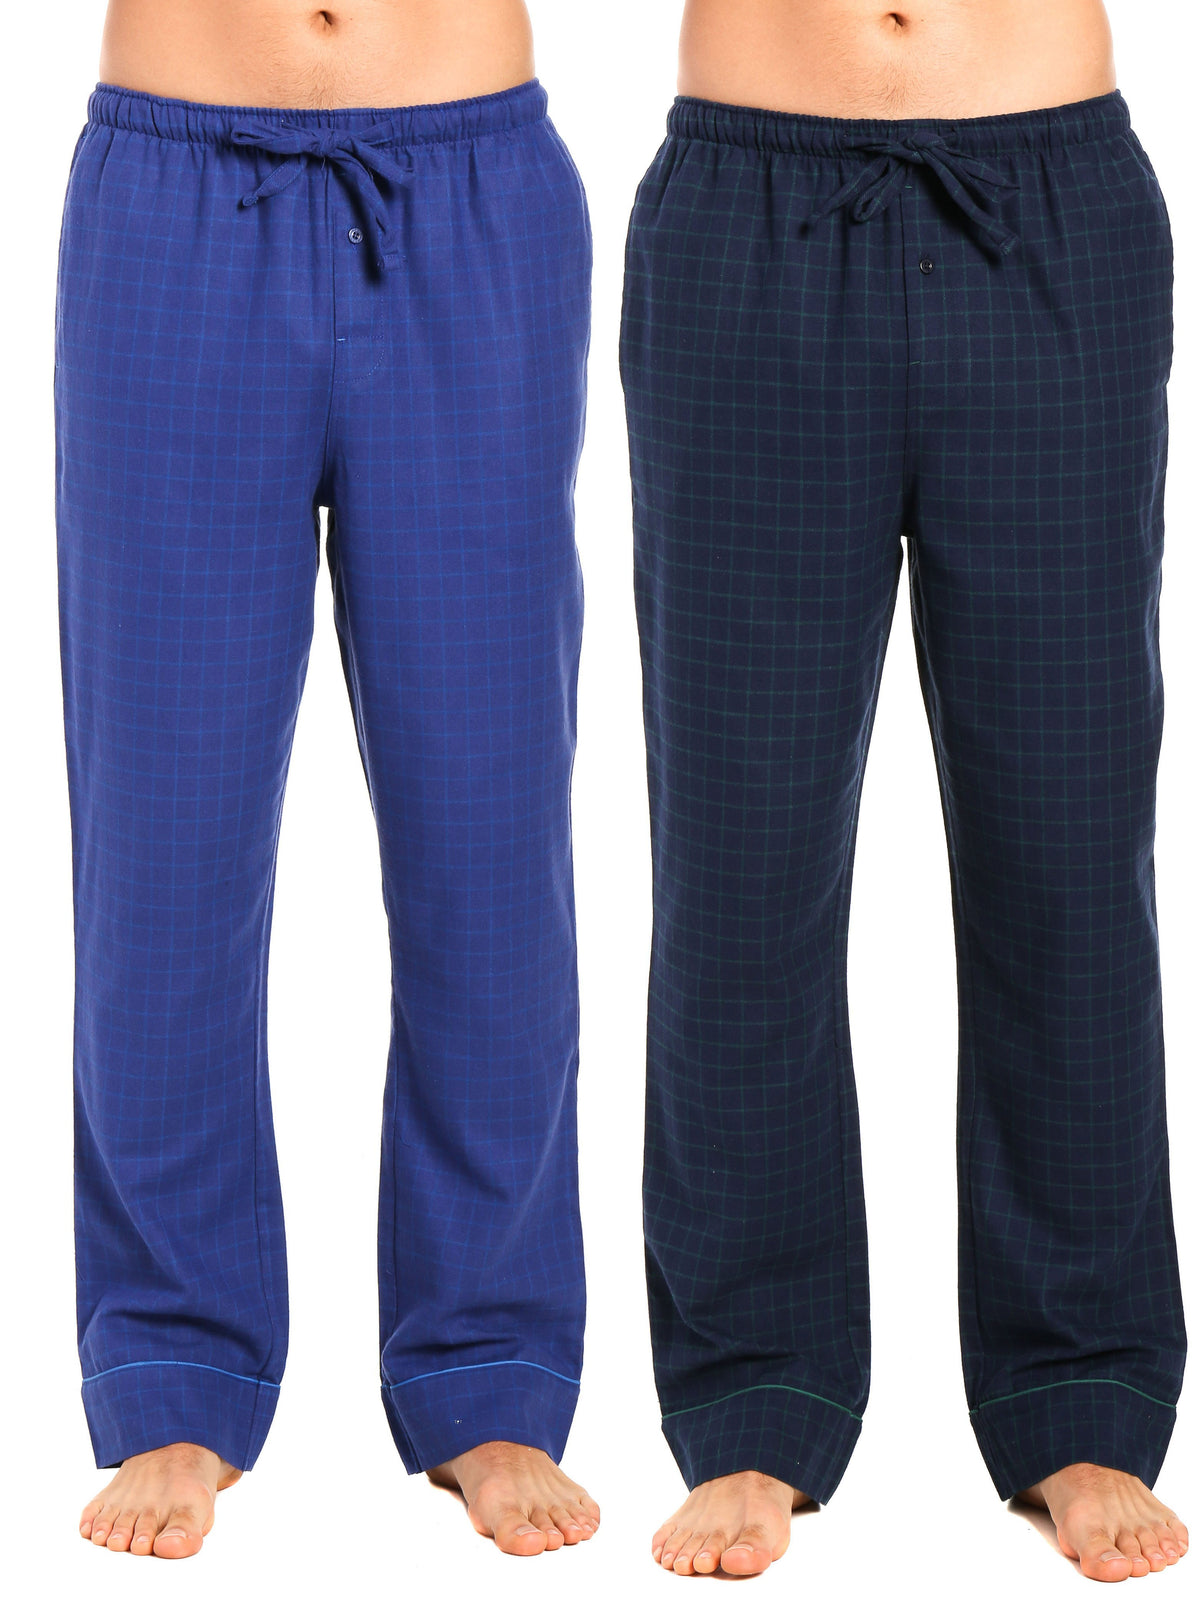 2-Pack Men's 100% Cotton Flannel Lounge Pants (Windowpane Checks Navy-Green)